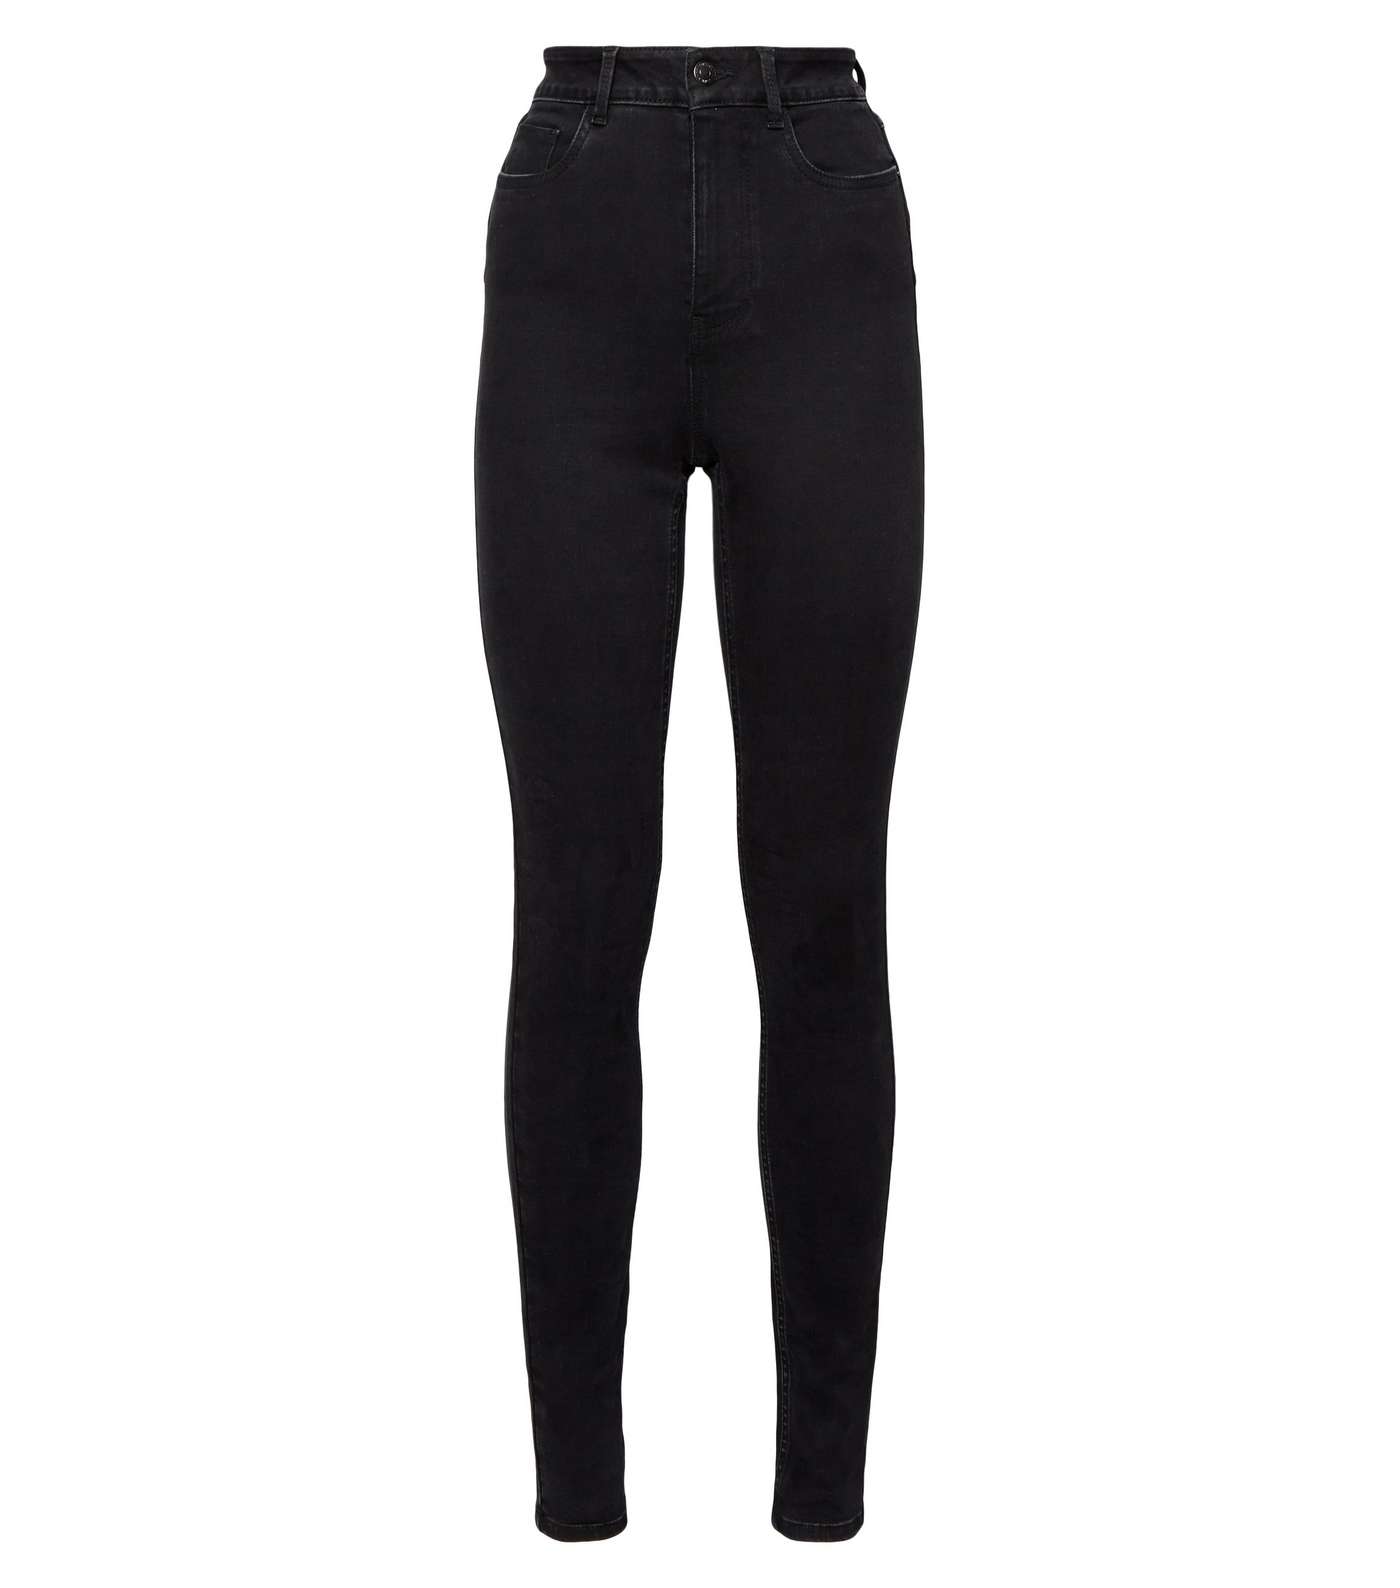 Tall Black Dark Wash 'Lift & Shape' Jenna Skinny Jeans Image 4